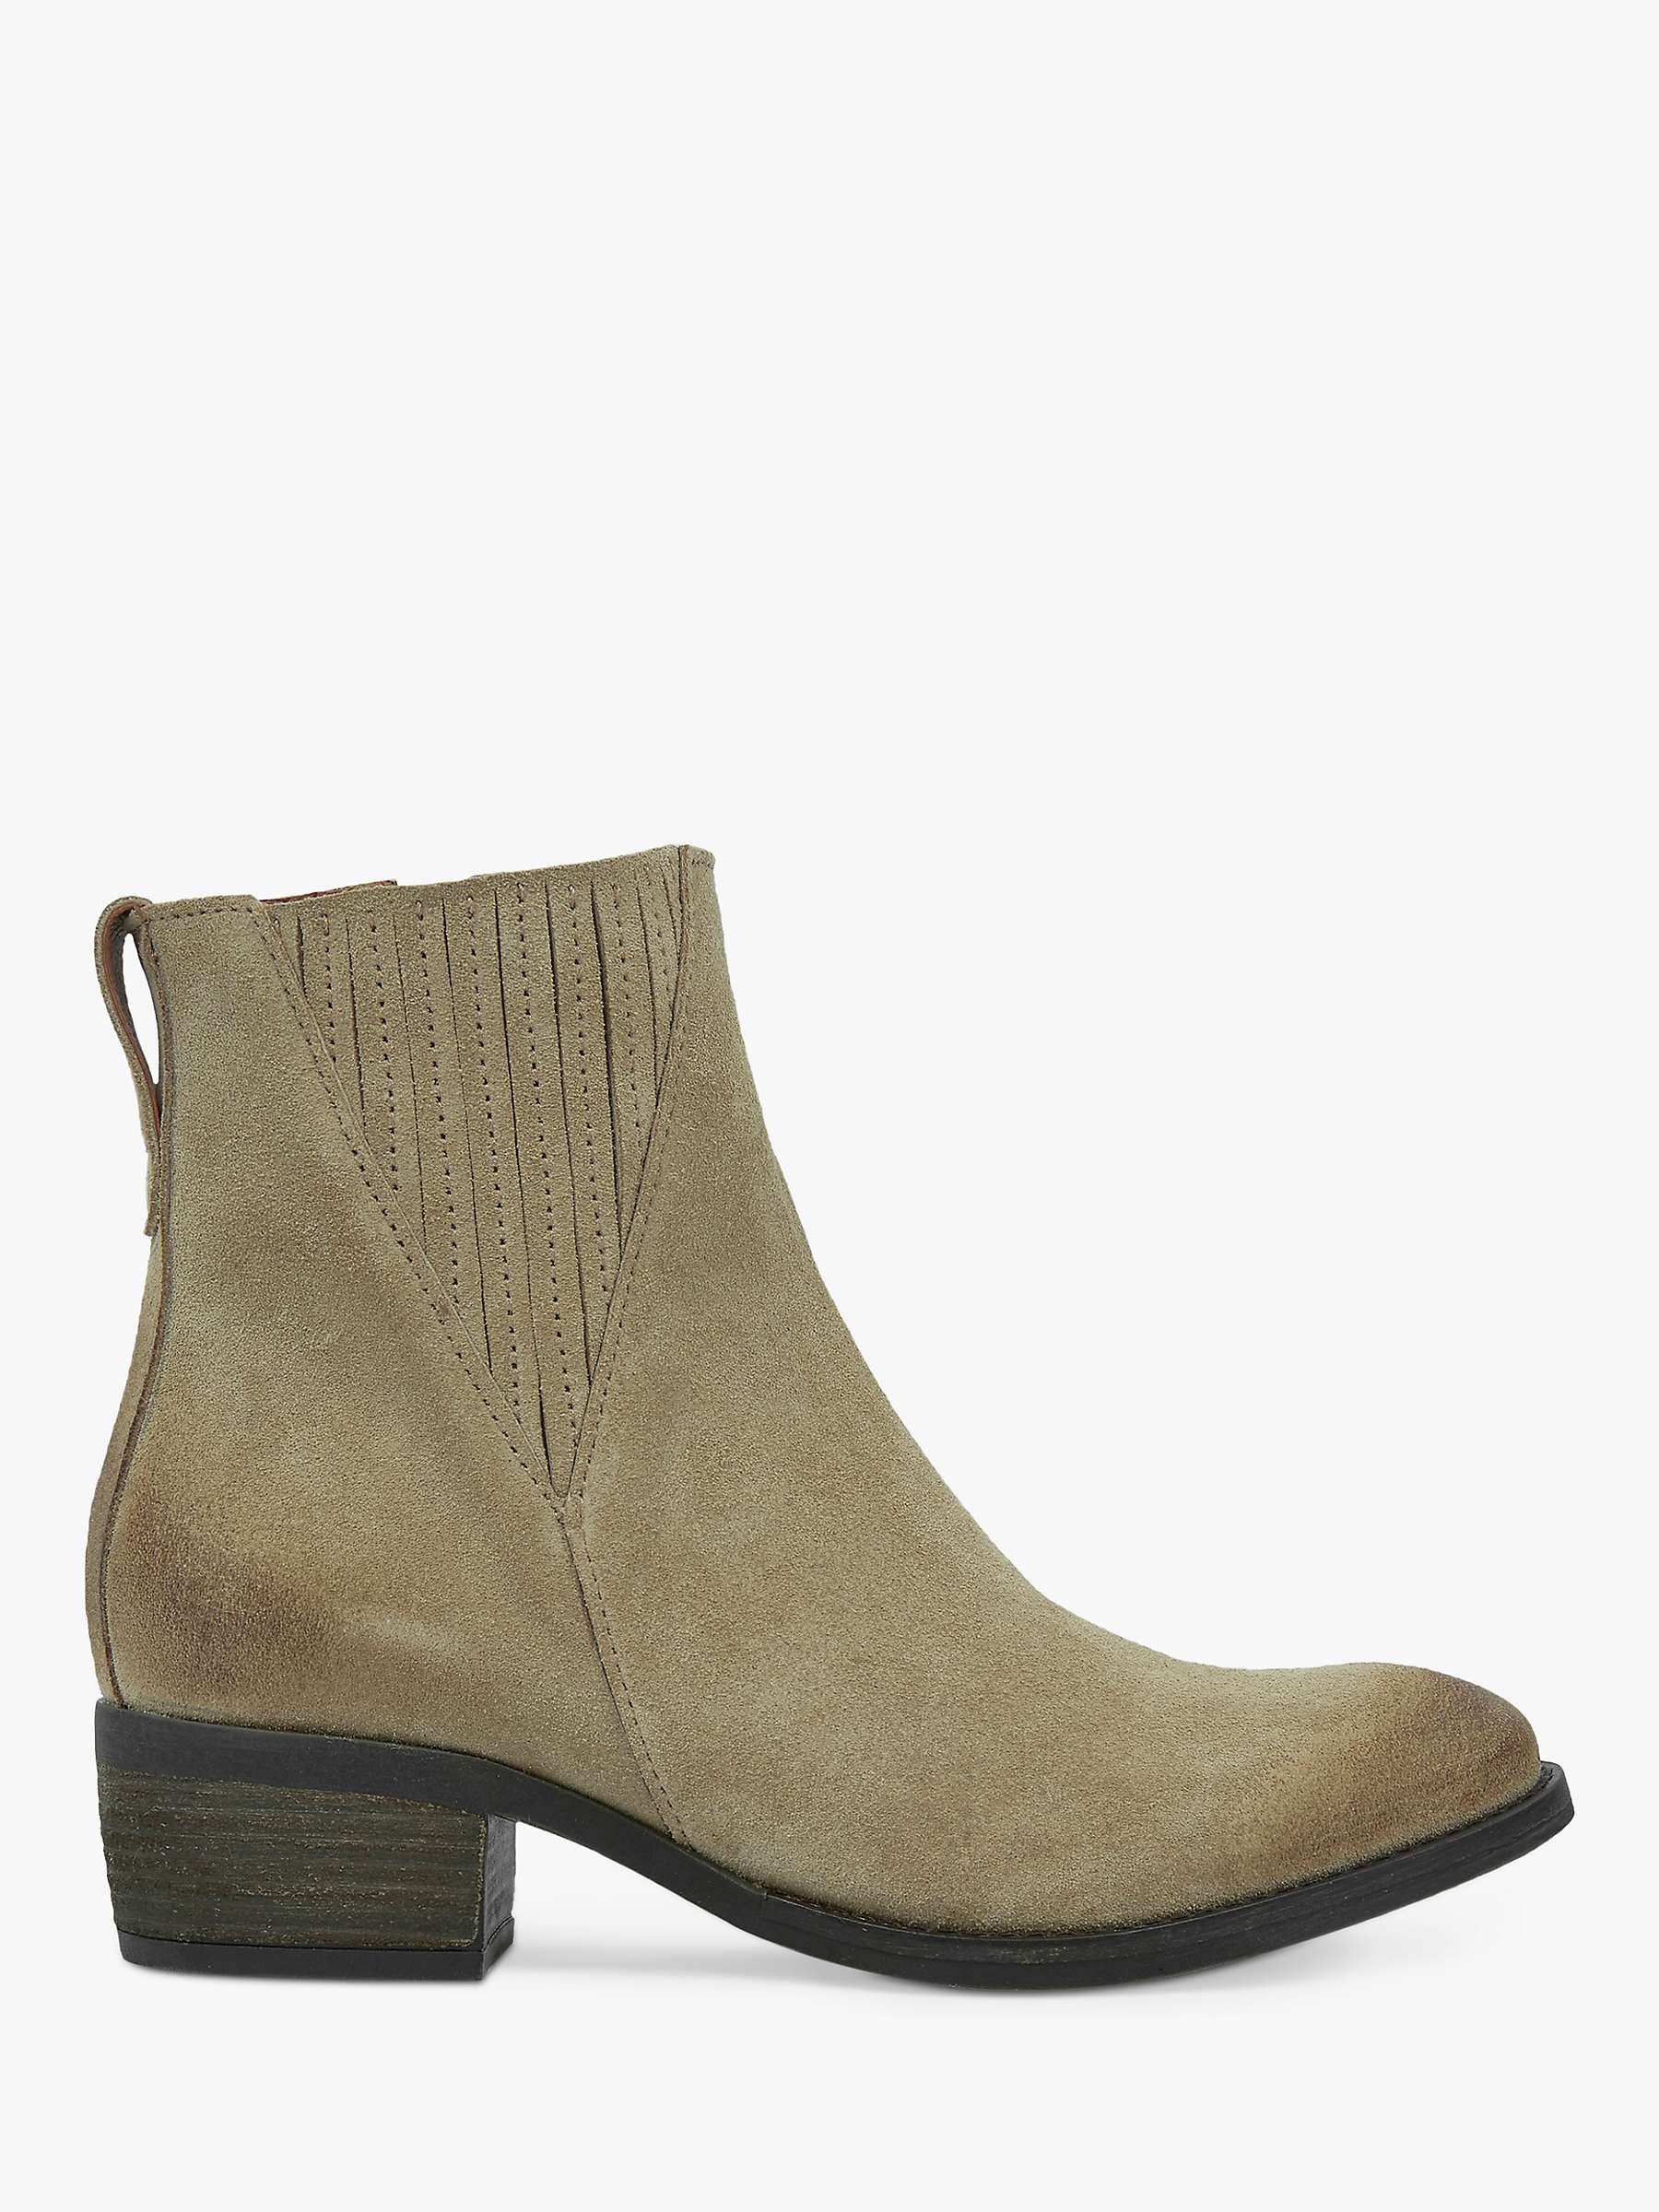 Buy Celtic & Co. Western Suede Ankle Boots, Camel Online at johnlewis.com